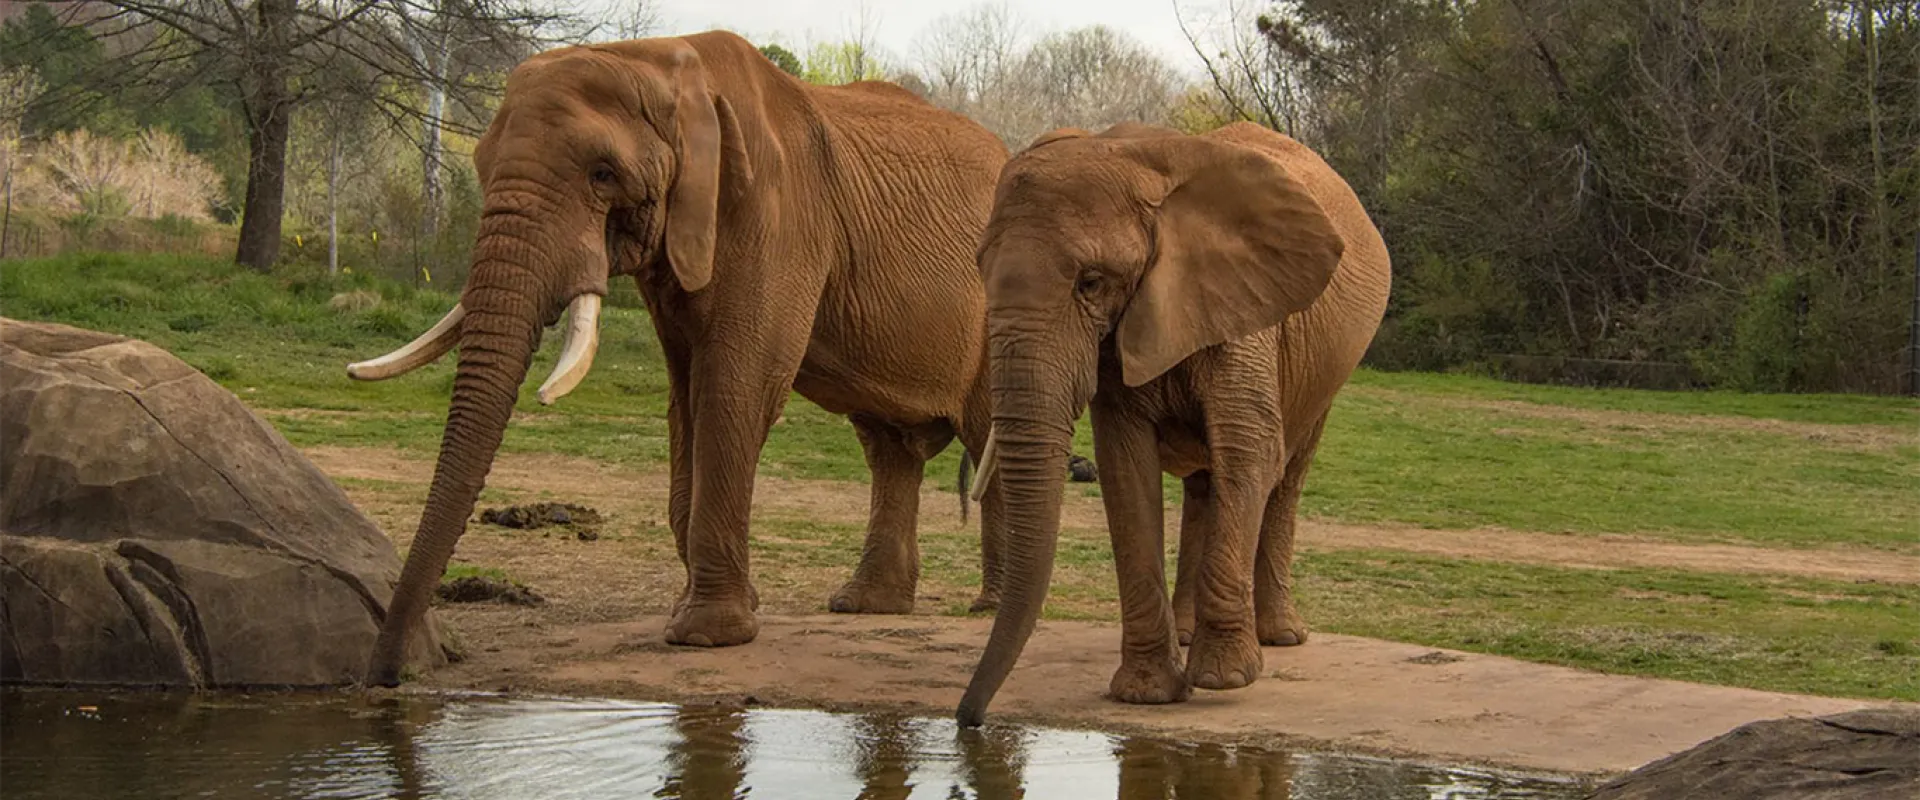 Zookeeper Appreciation Week: Managing & Training Elephants